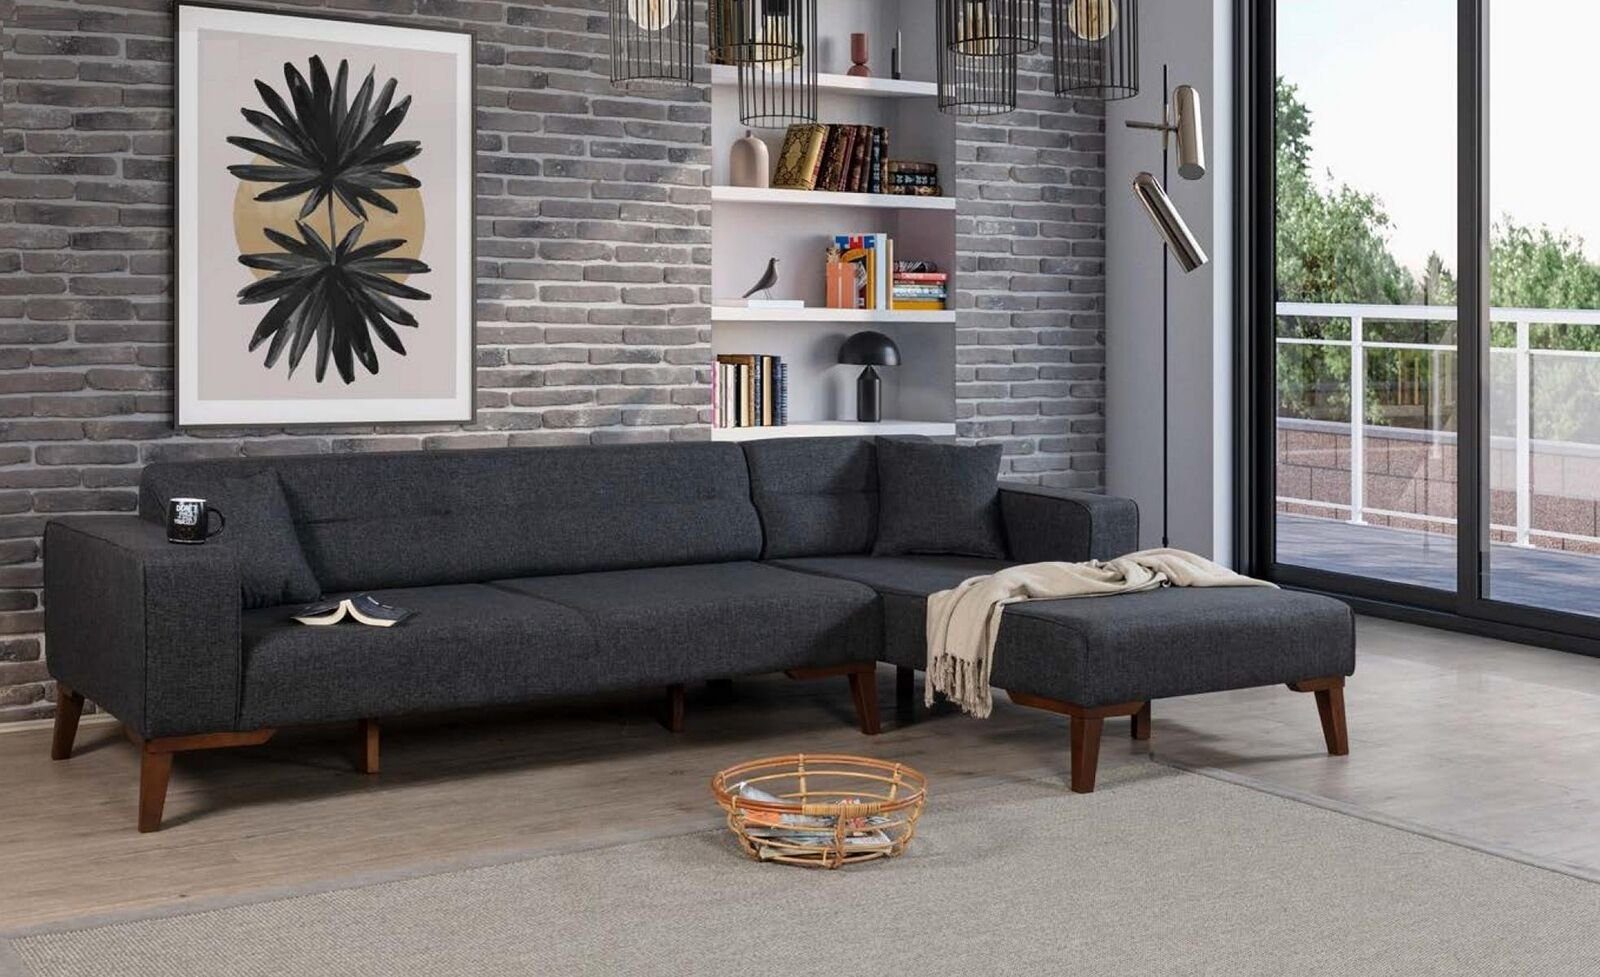 JVmoebel Ecksofa Design Sofa L Form Polster Couch Wohnzimmer Möbel Ecksofa Textil Grau